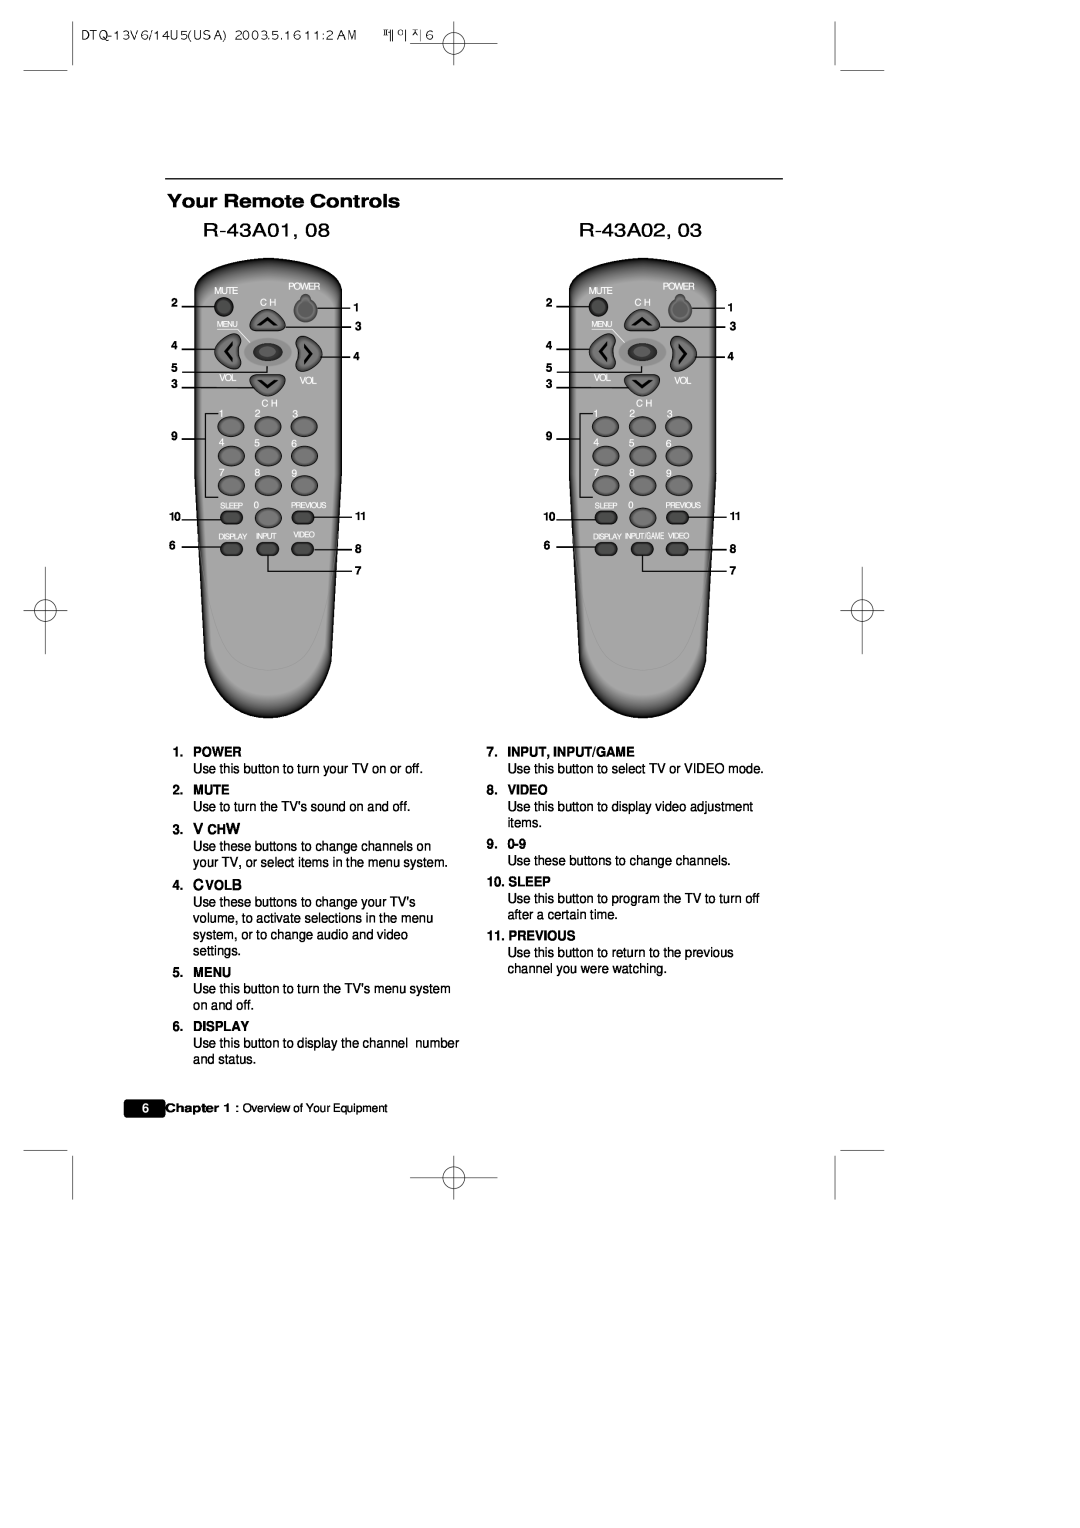 Daewoo DTQ 19V1FC Your Remote Controls, R-43A01, R-43A02, Vchw, Power, Mute, Cvolb, Menu, Display, Input, Input/Game 